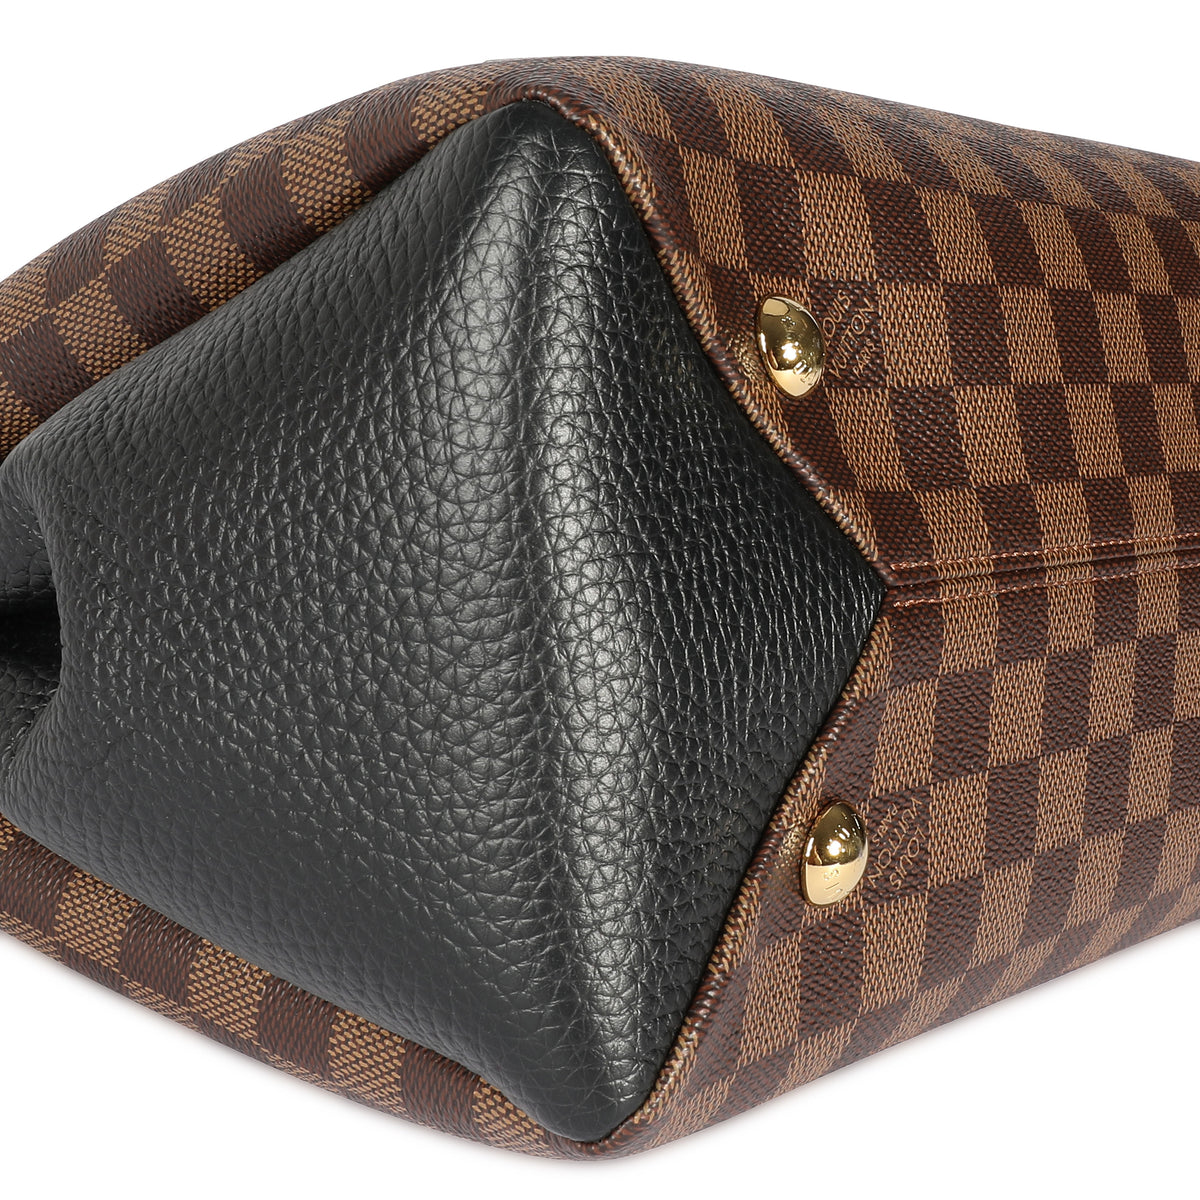 Louis Vuitton Damier Ebene & Black Taurillon Leather Brittany Bag